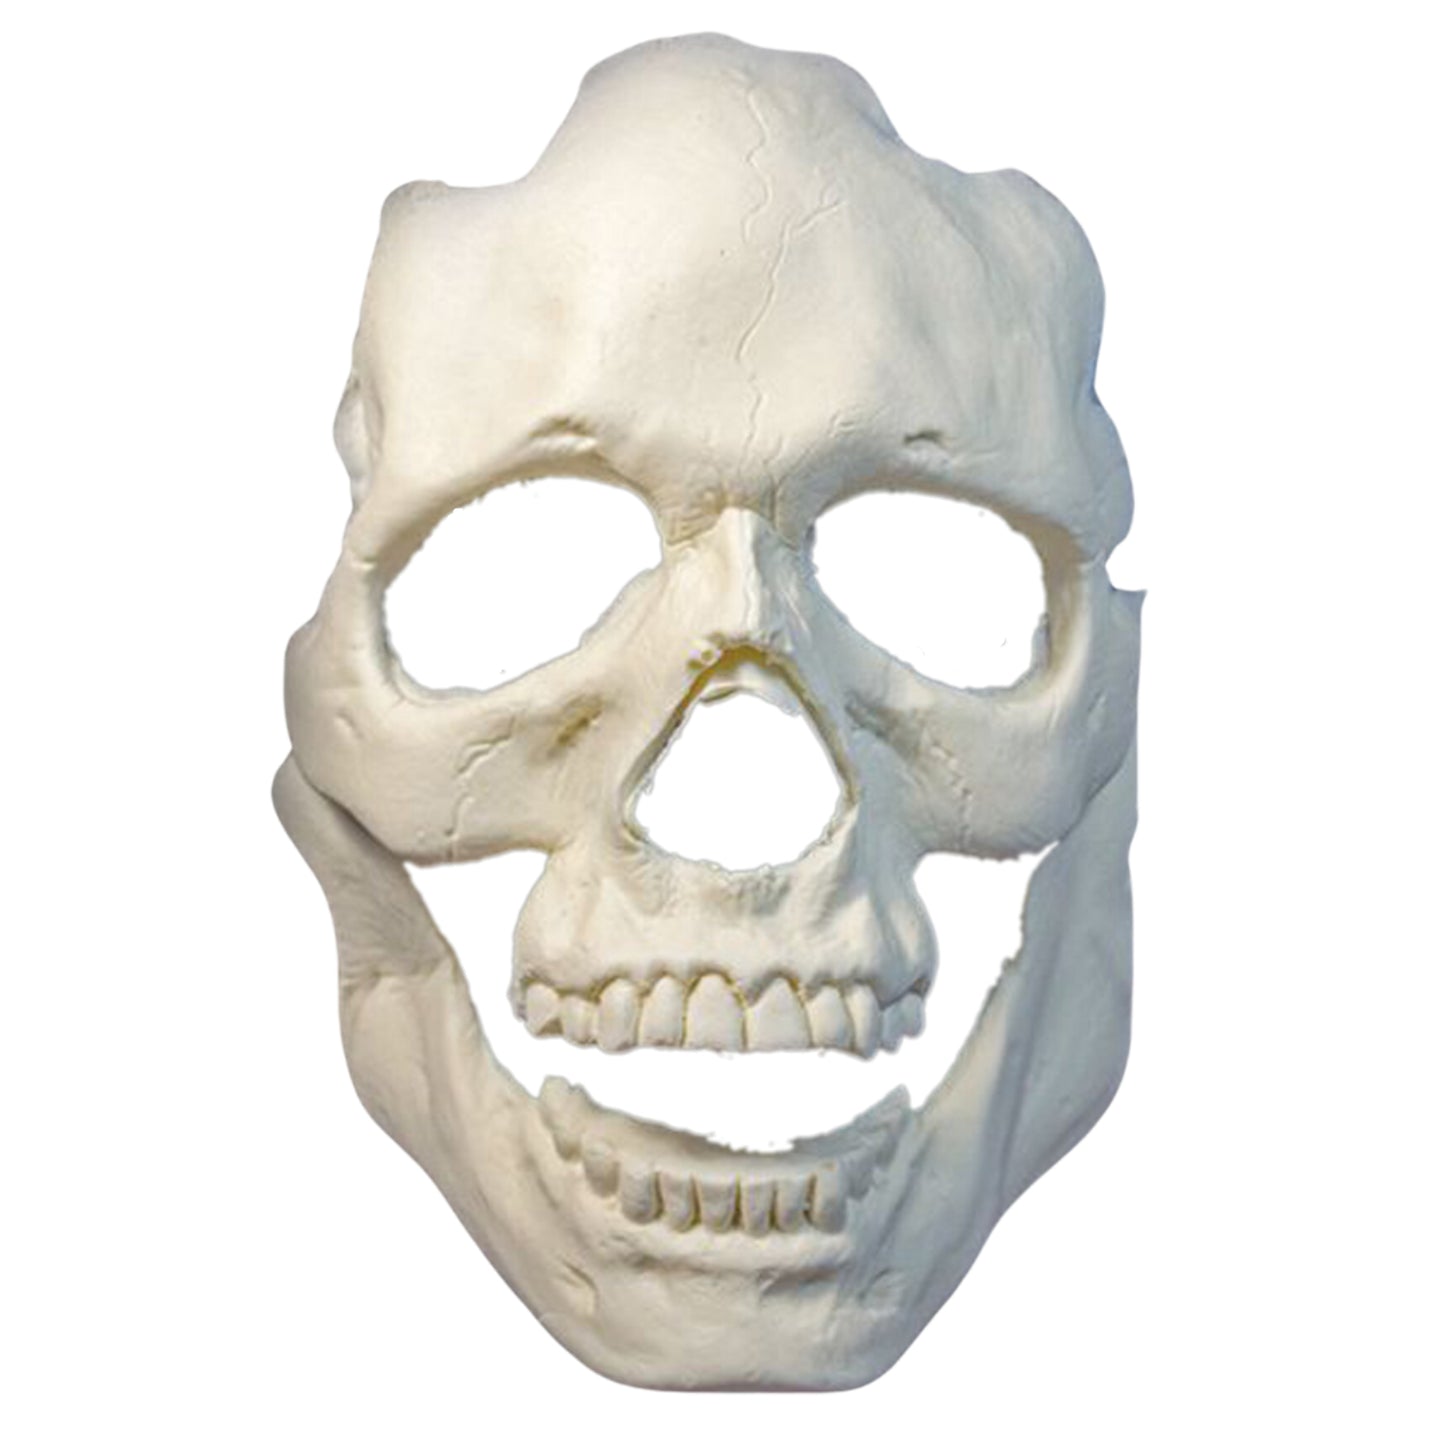 Woochie Skull Foam Latex Prosthetic